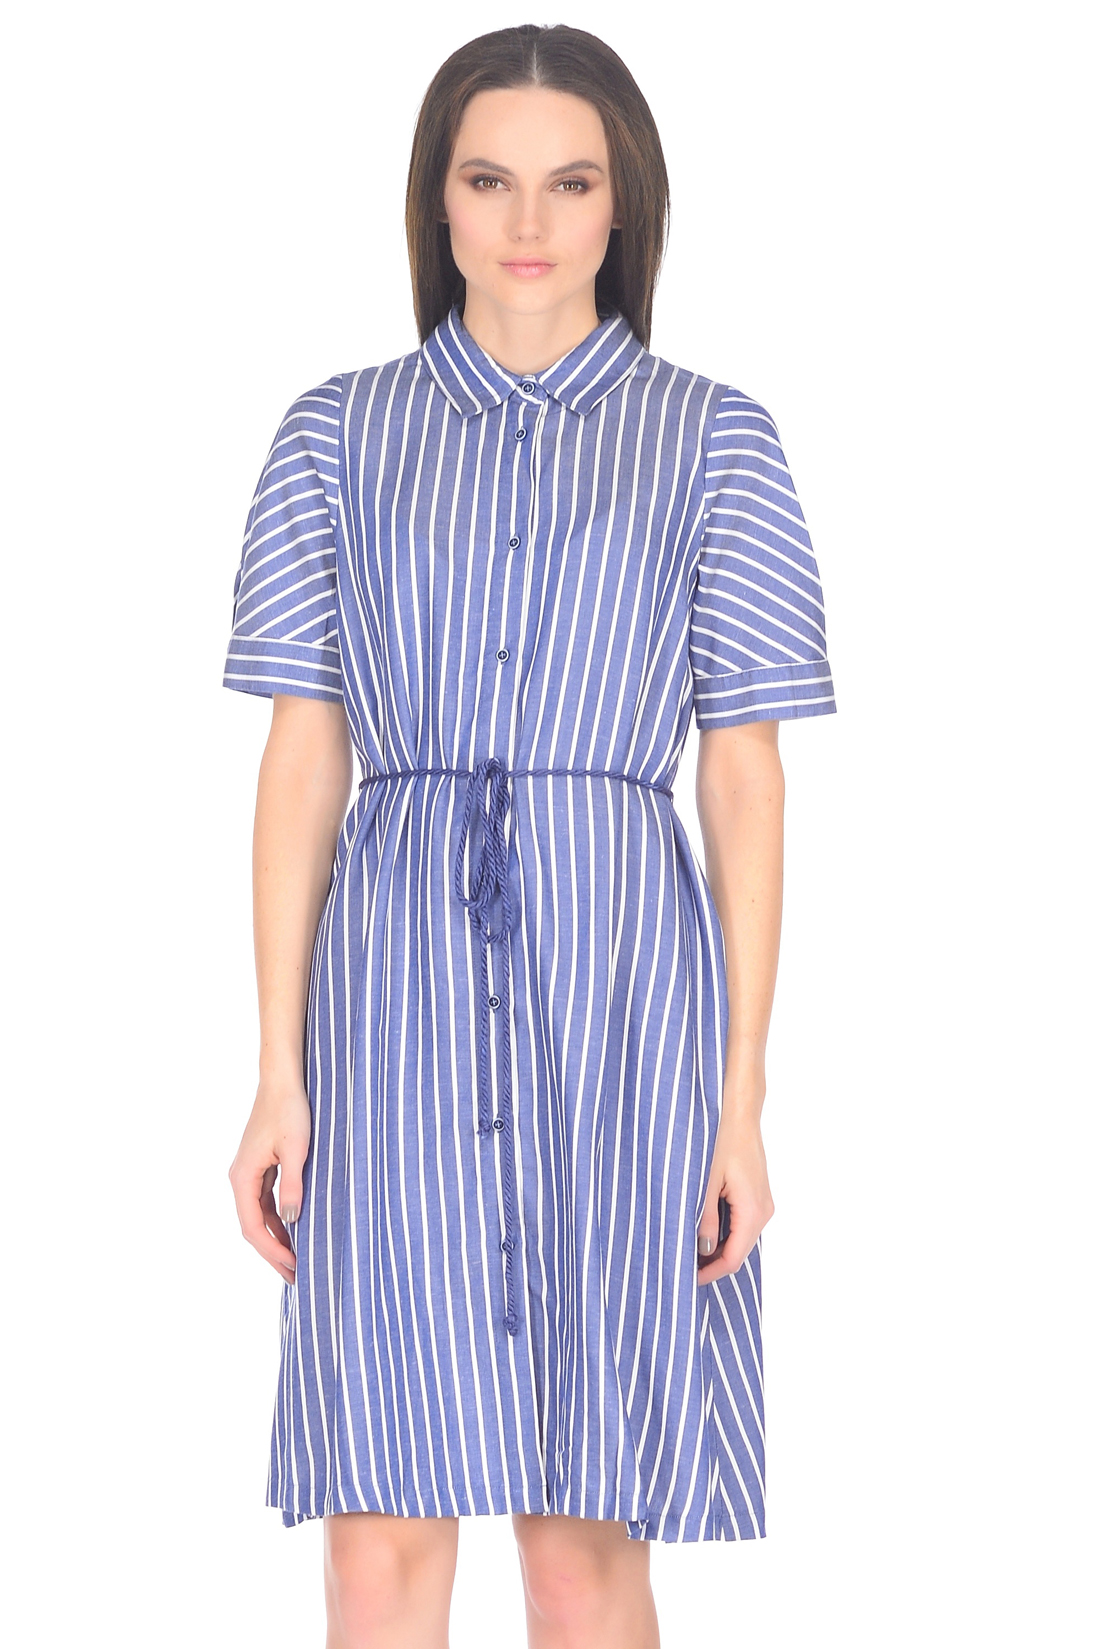 Платье-рубашка со льном (арт. baon B458029), размер S, цвет dark navy striped#синий Платье-рубашка со льном (арт. baon B458029) - фото 3